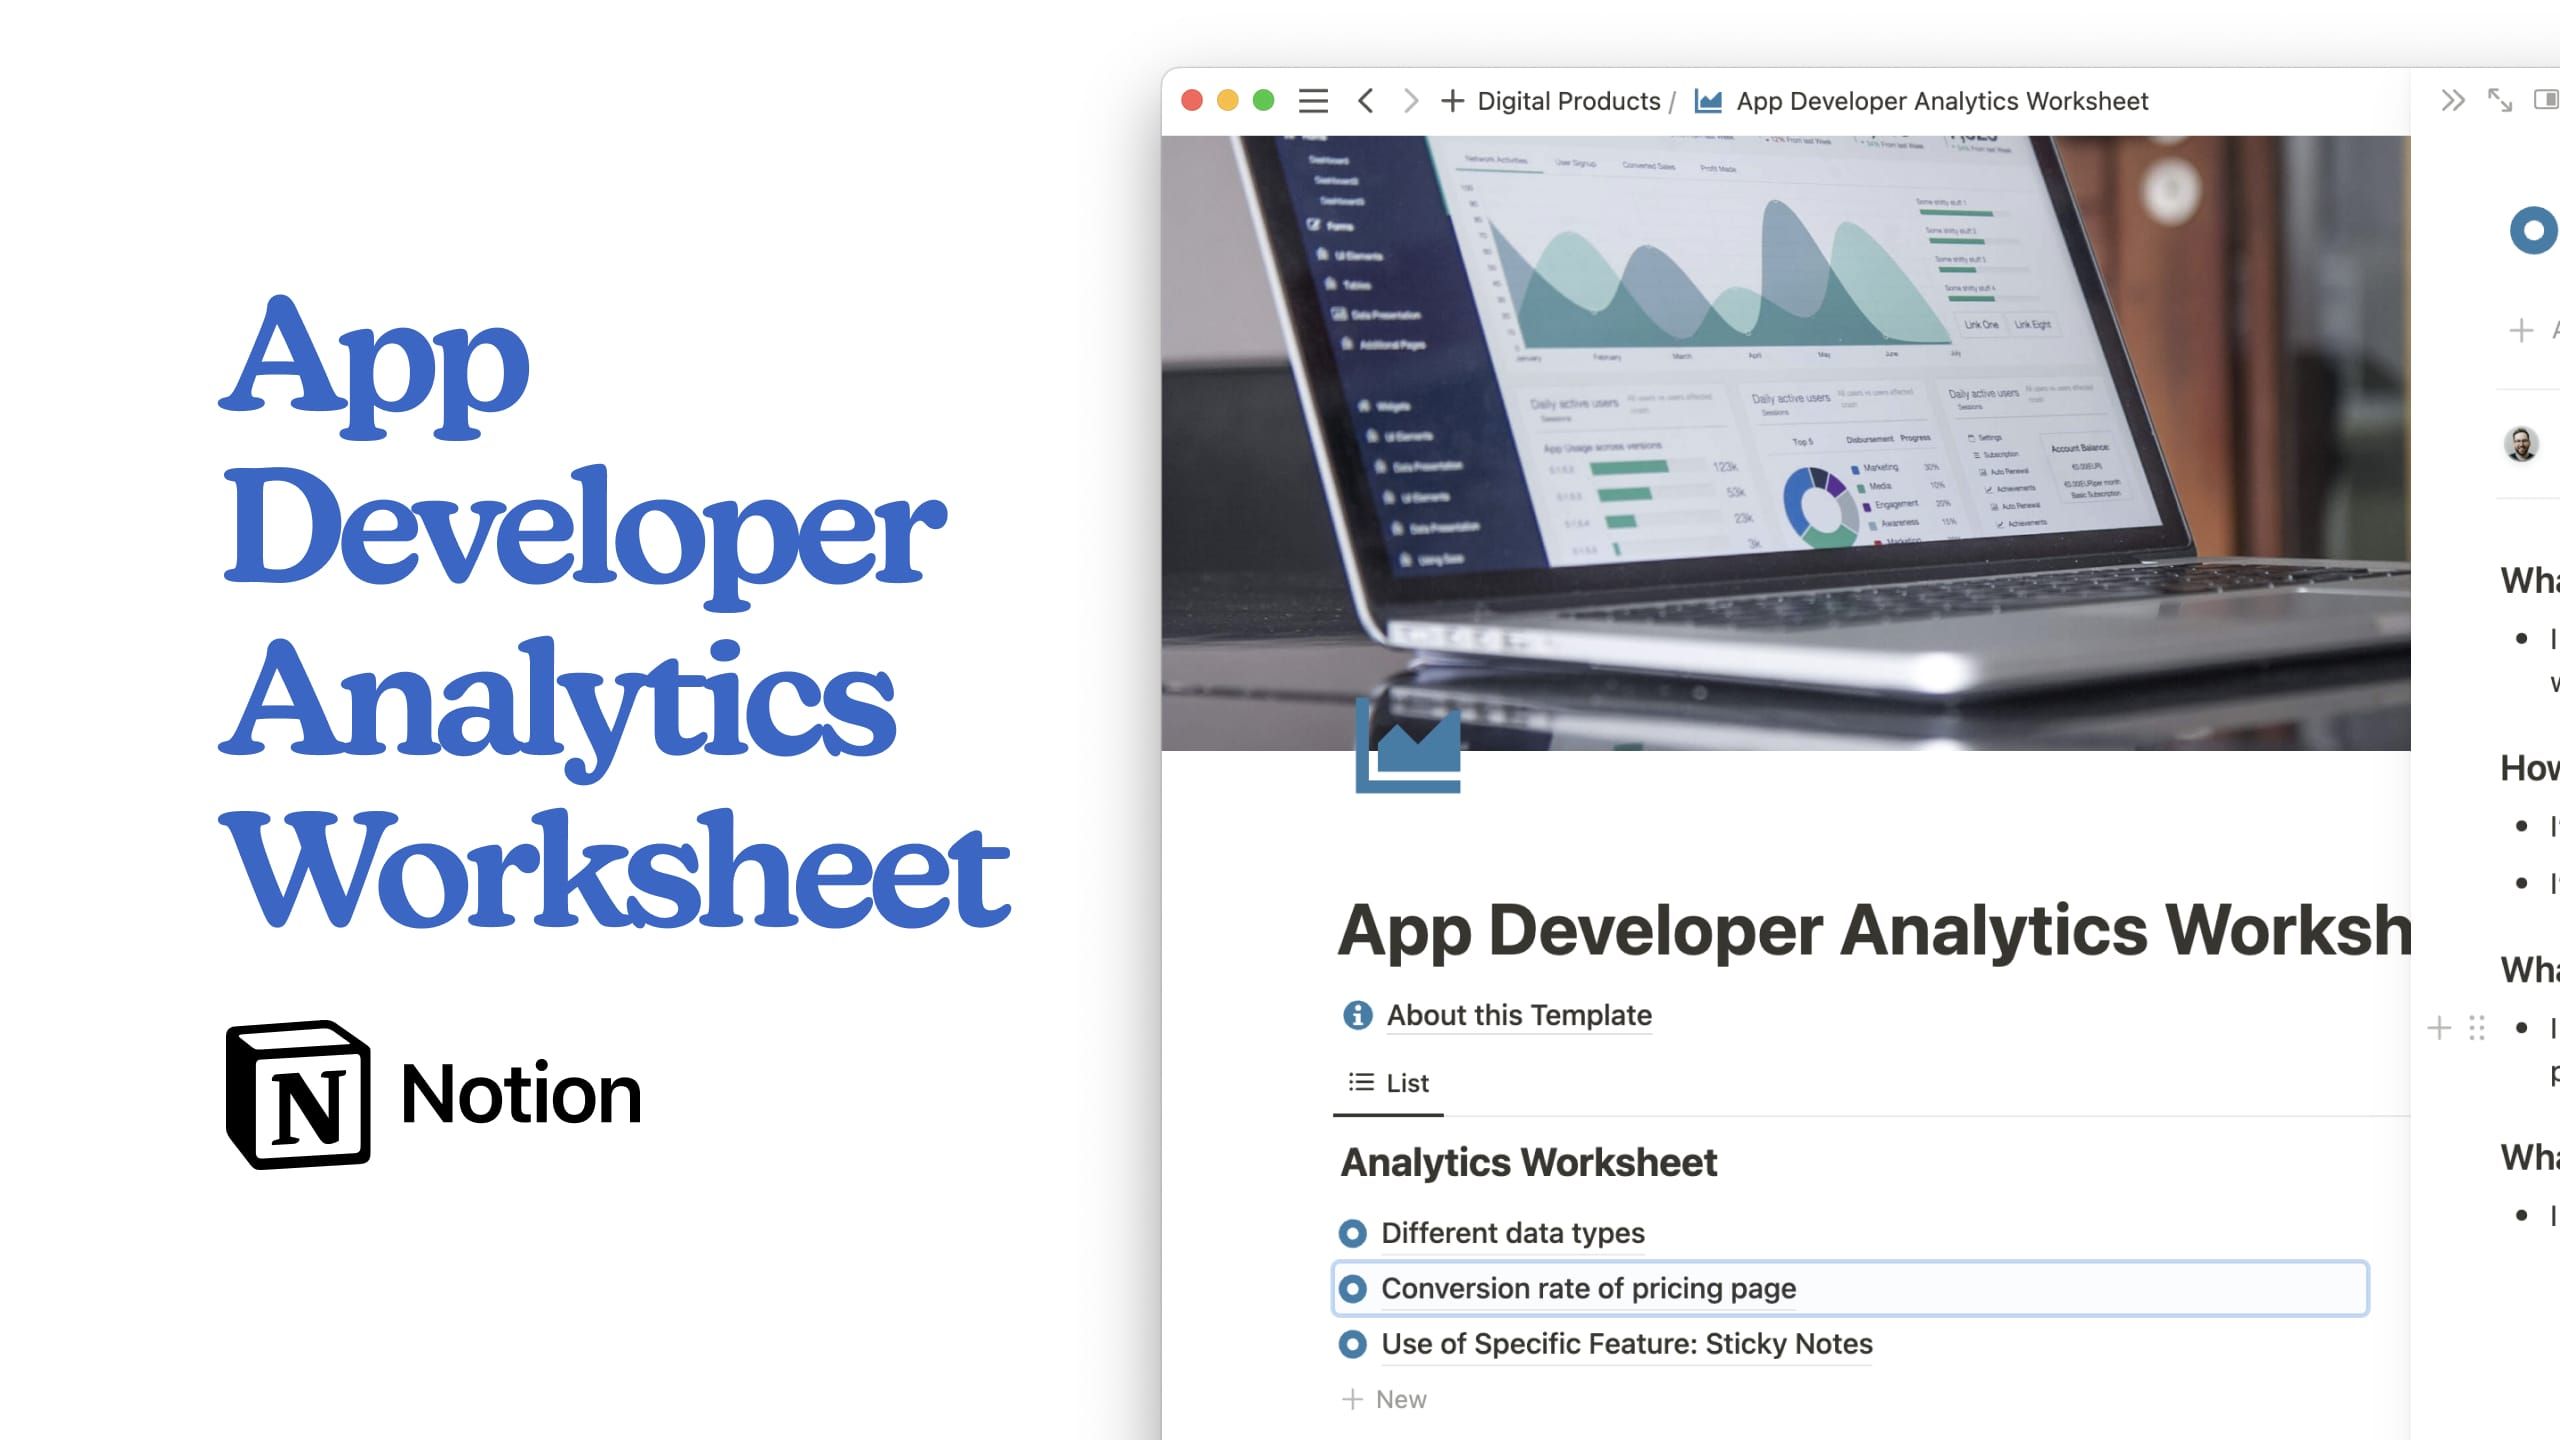 App Developer Analytics Worksheet Notion Template